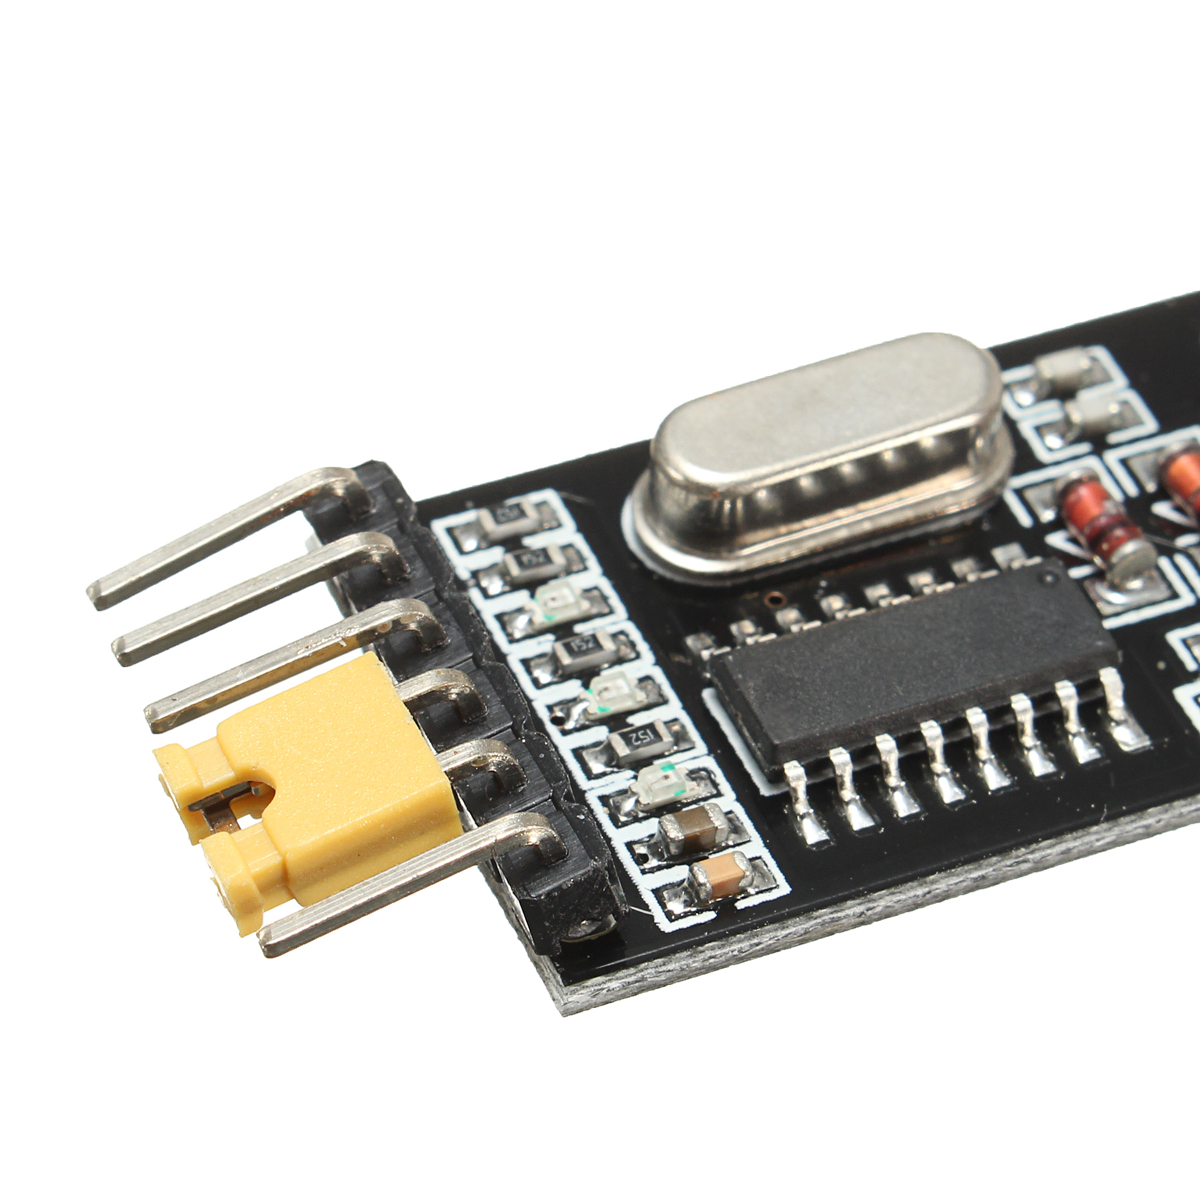 20pcs-33V-5V-USB-to-TTL-Converter-CH340G-UART-Serial-Adapter-Module-STC-1314968